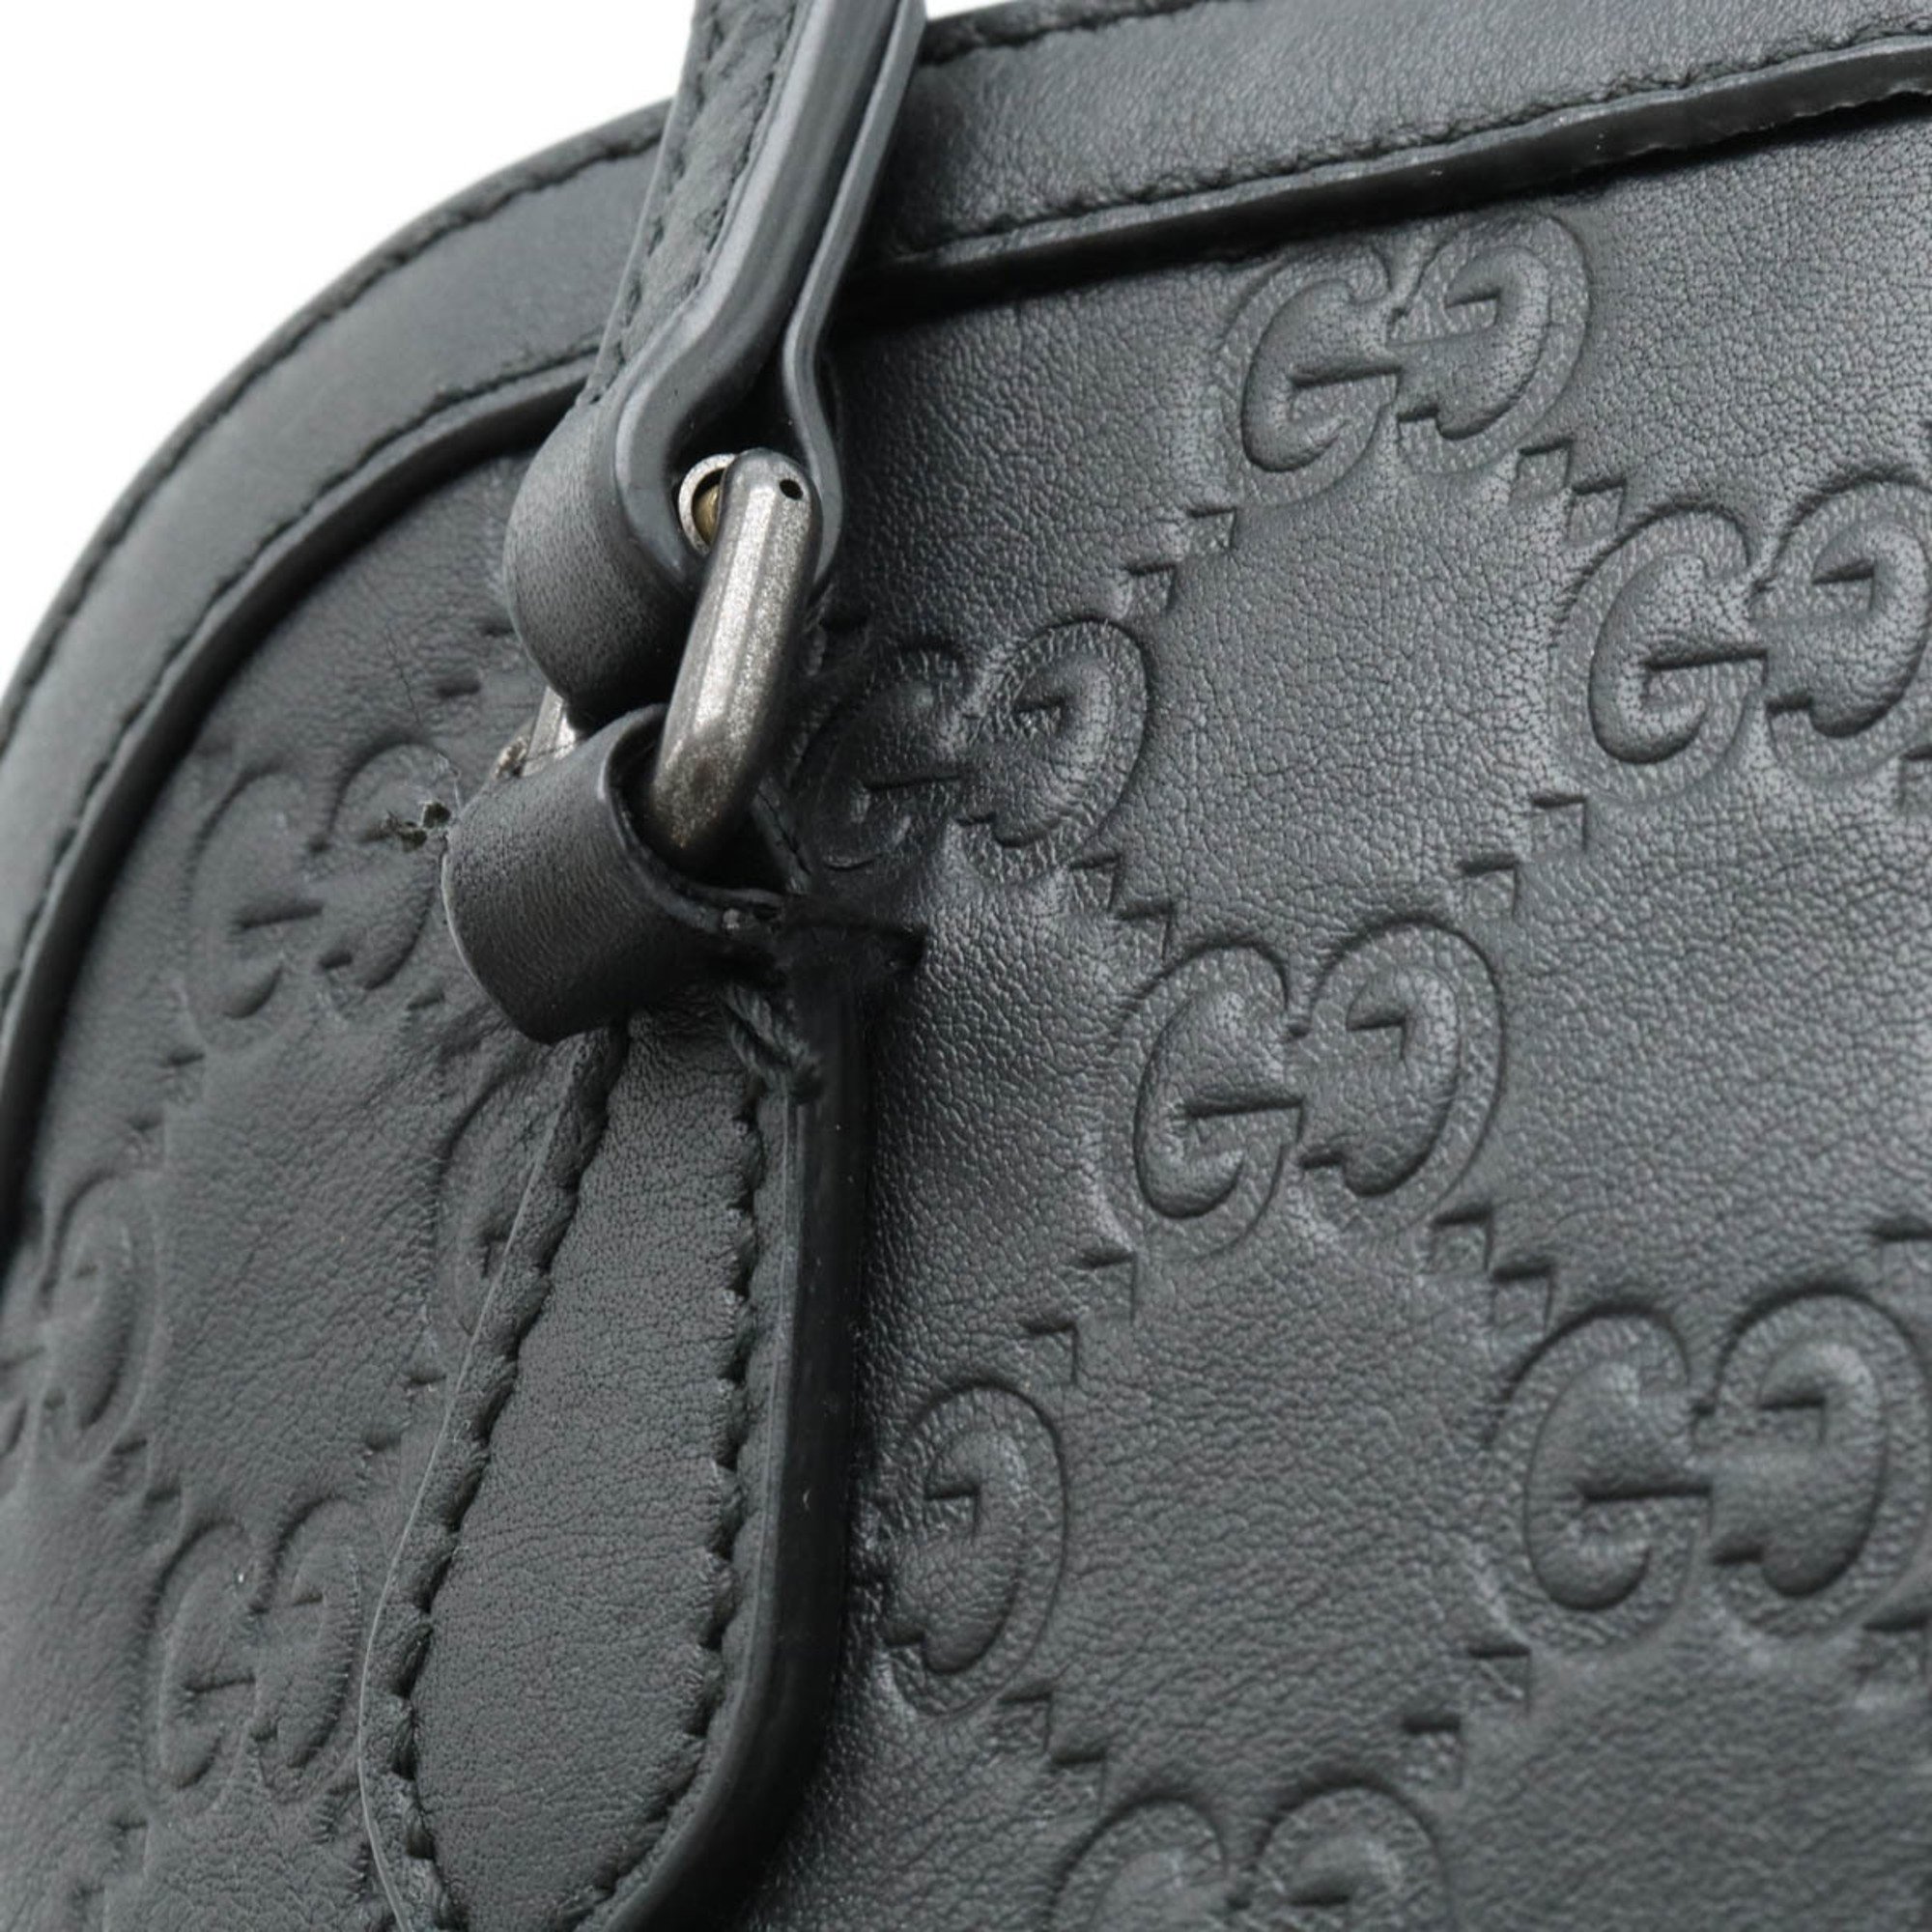 GUCCI Gucci handbag bag shoulder leather black 341504